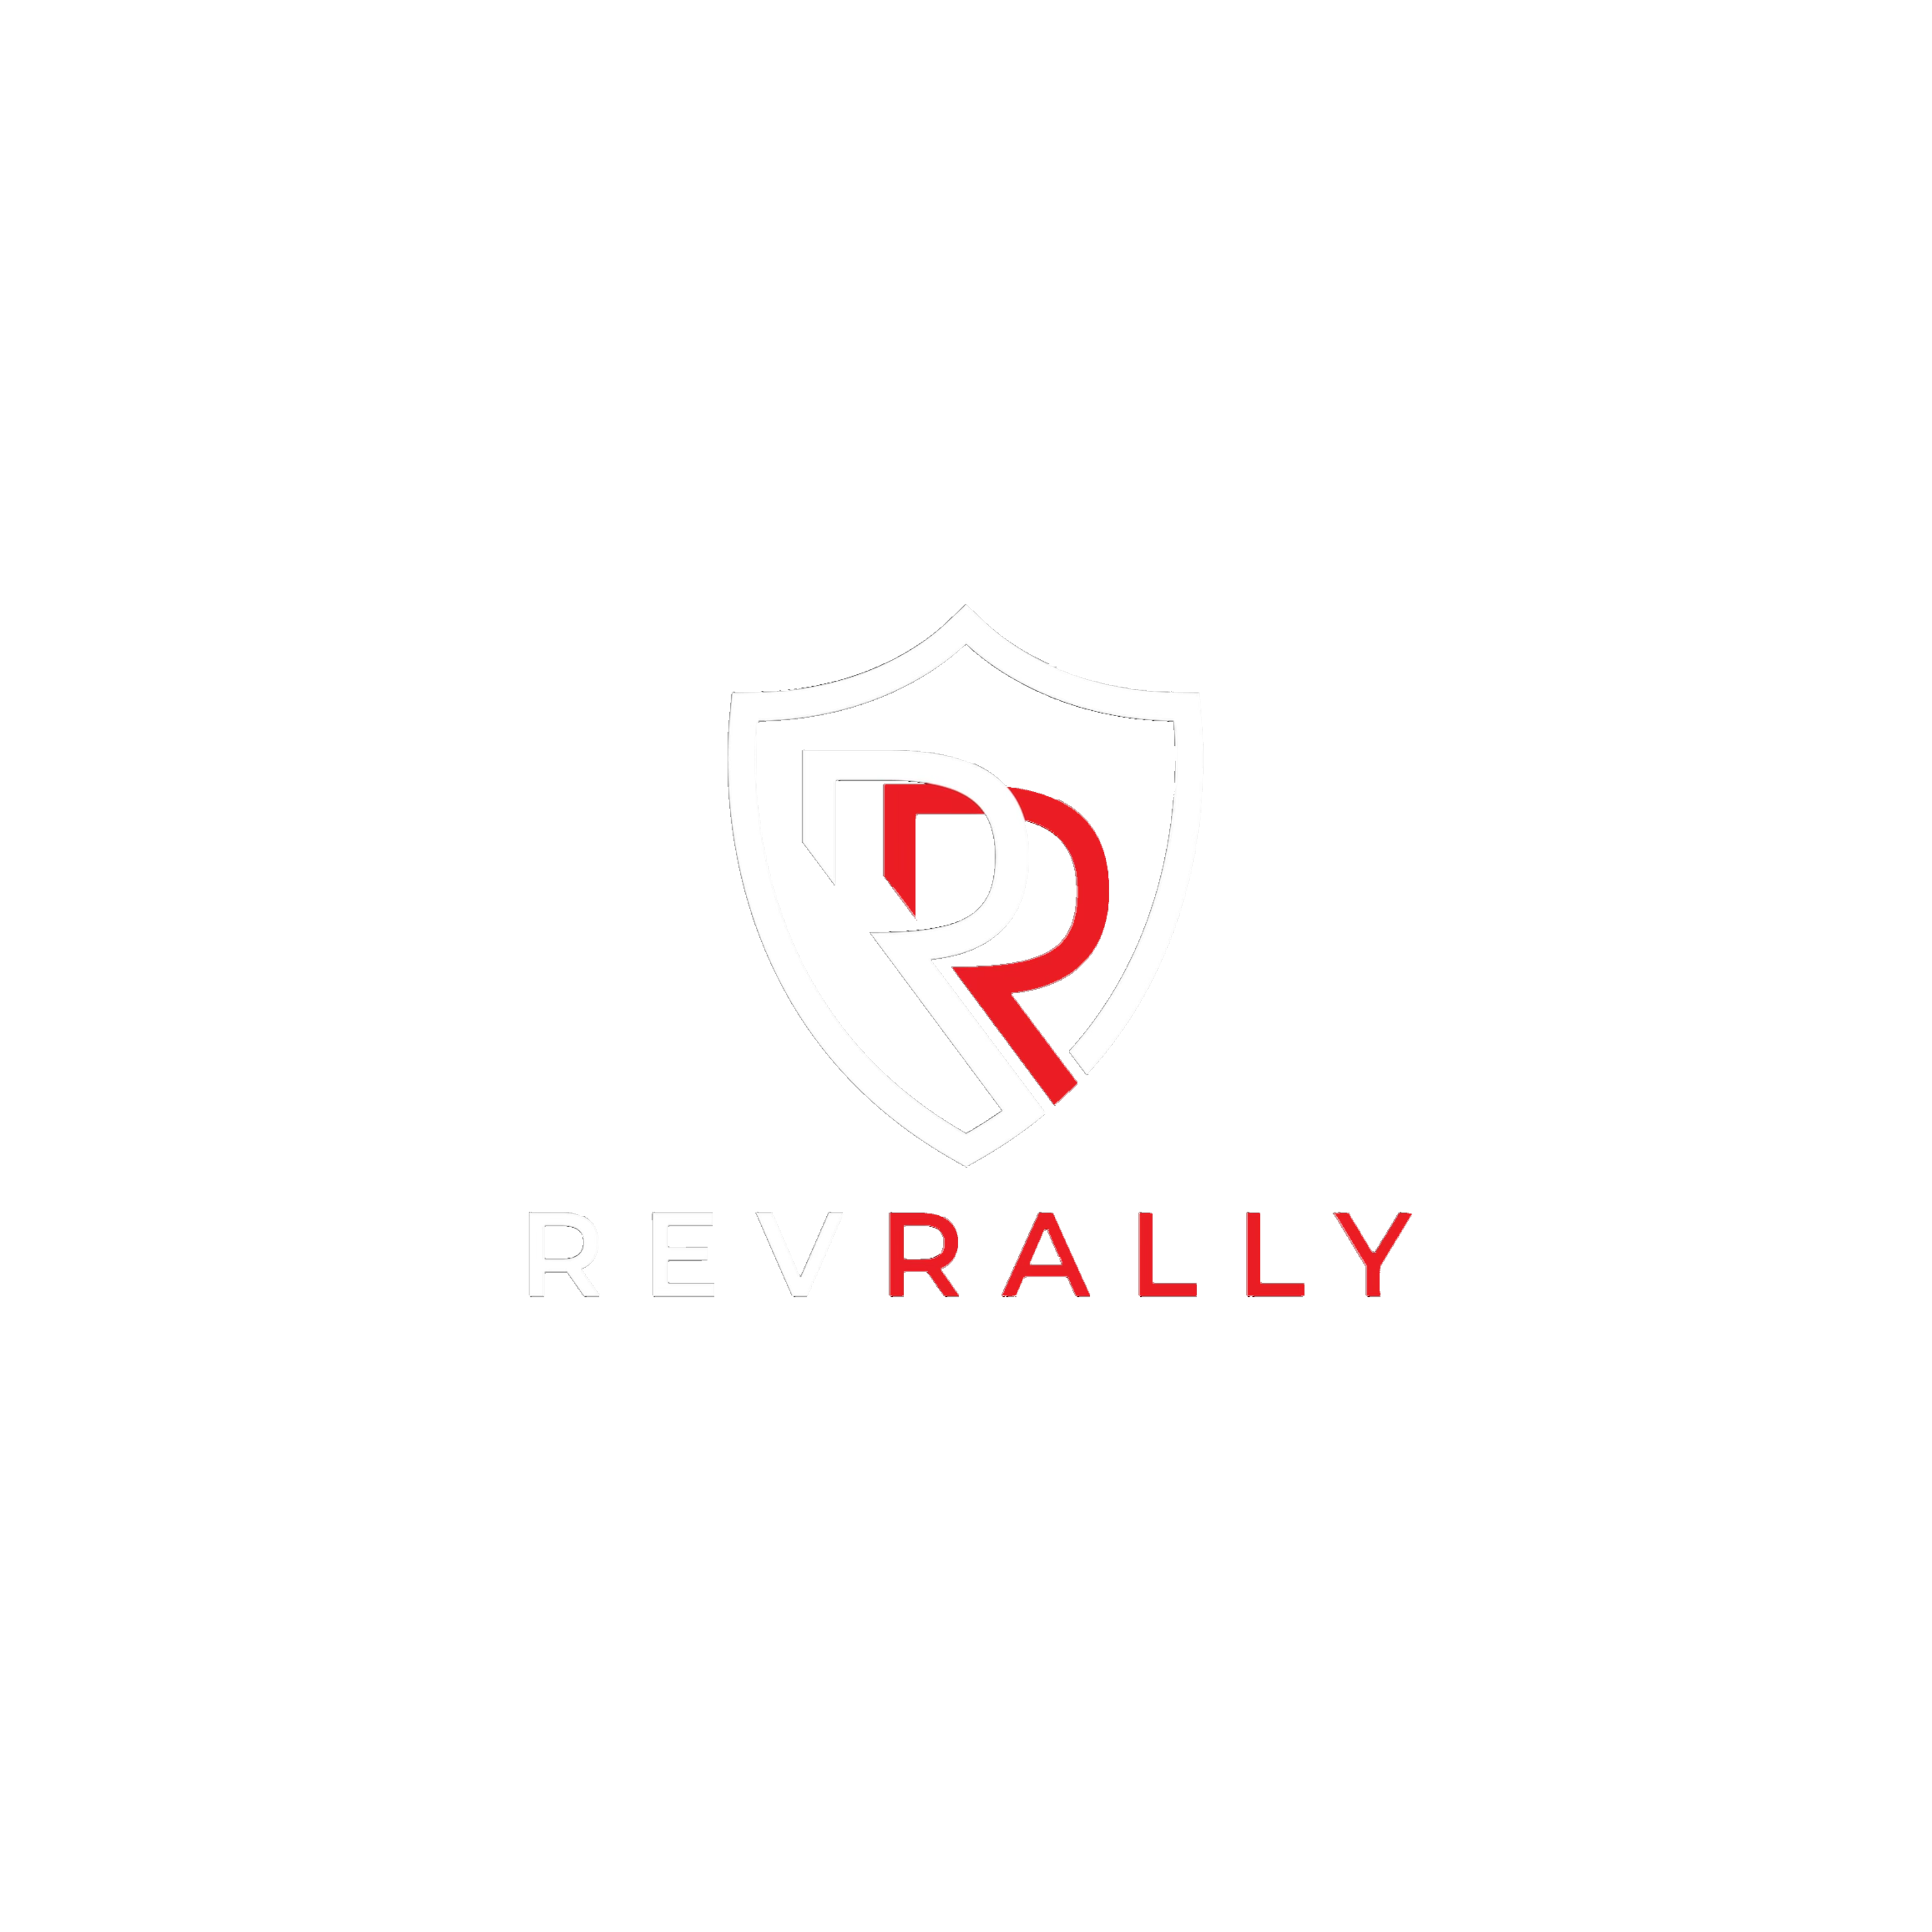 The Rev Rally